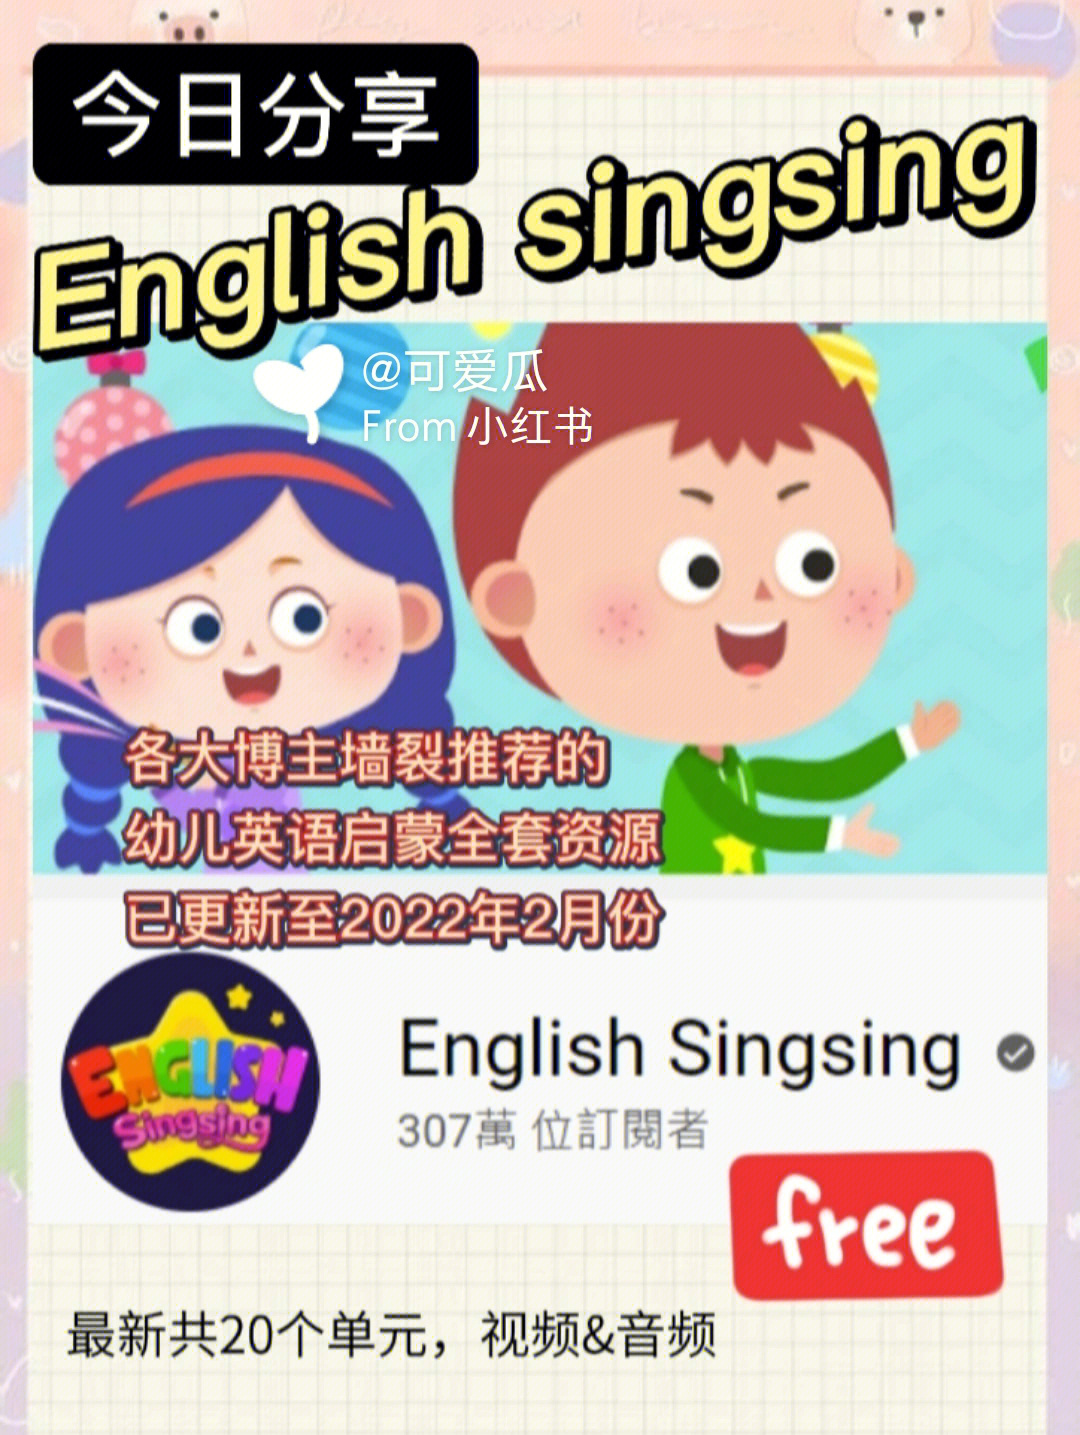 singsingsing合唱歌词图片